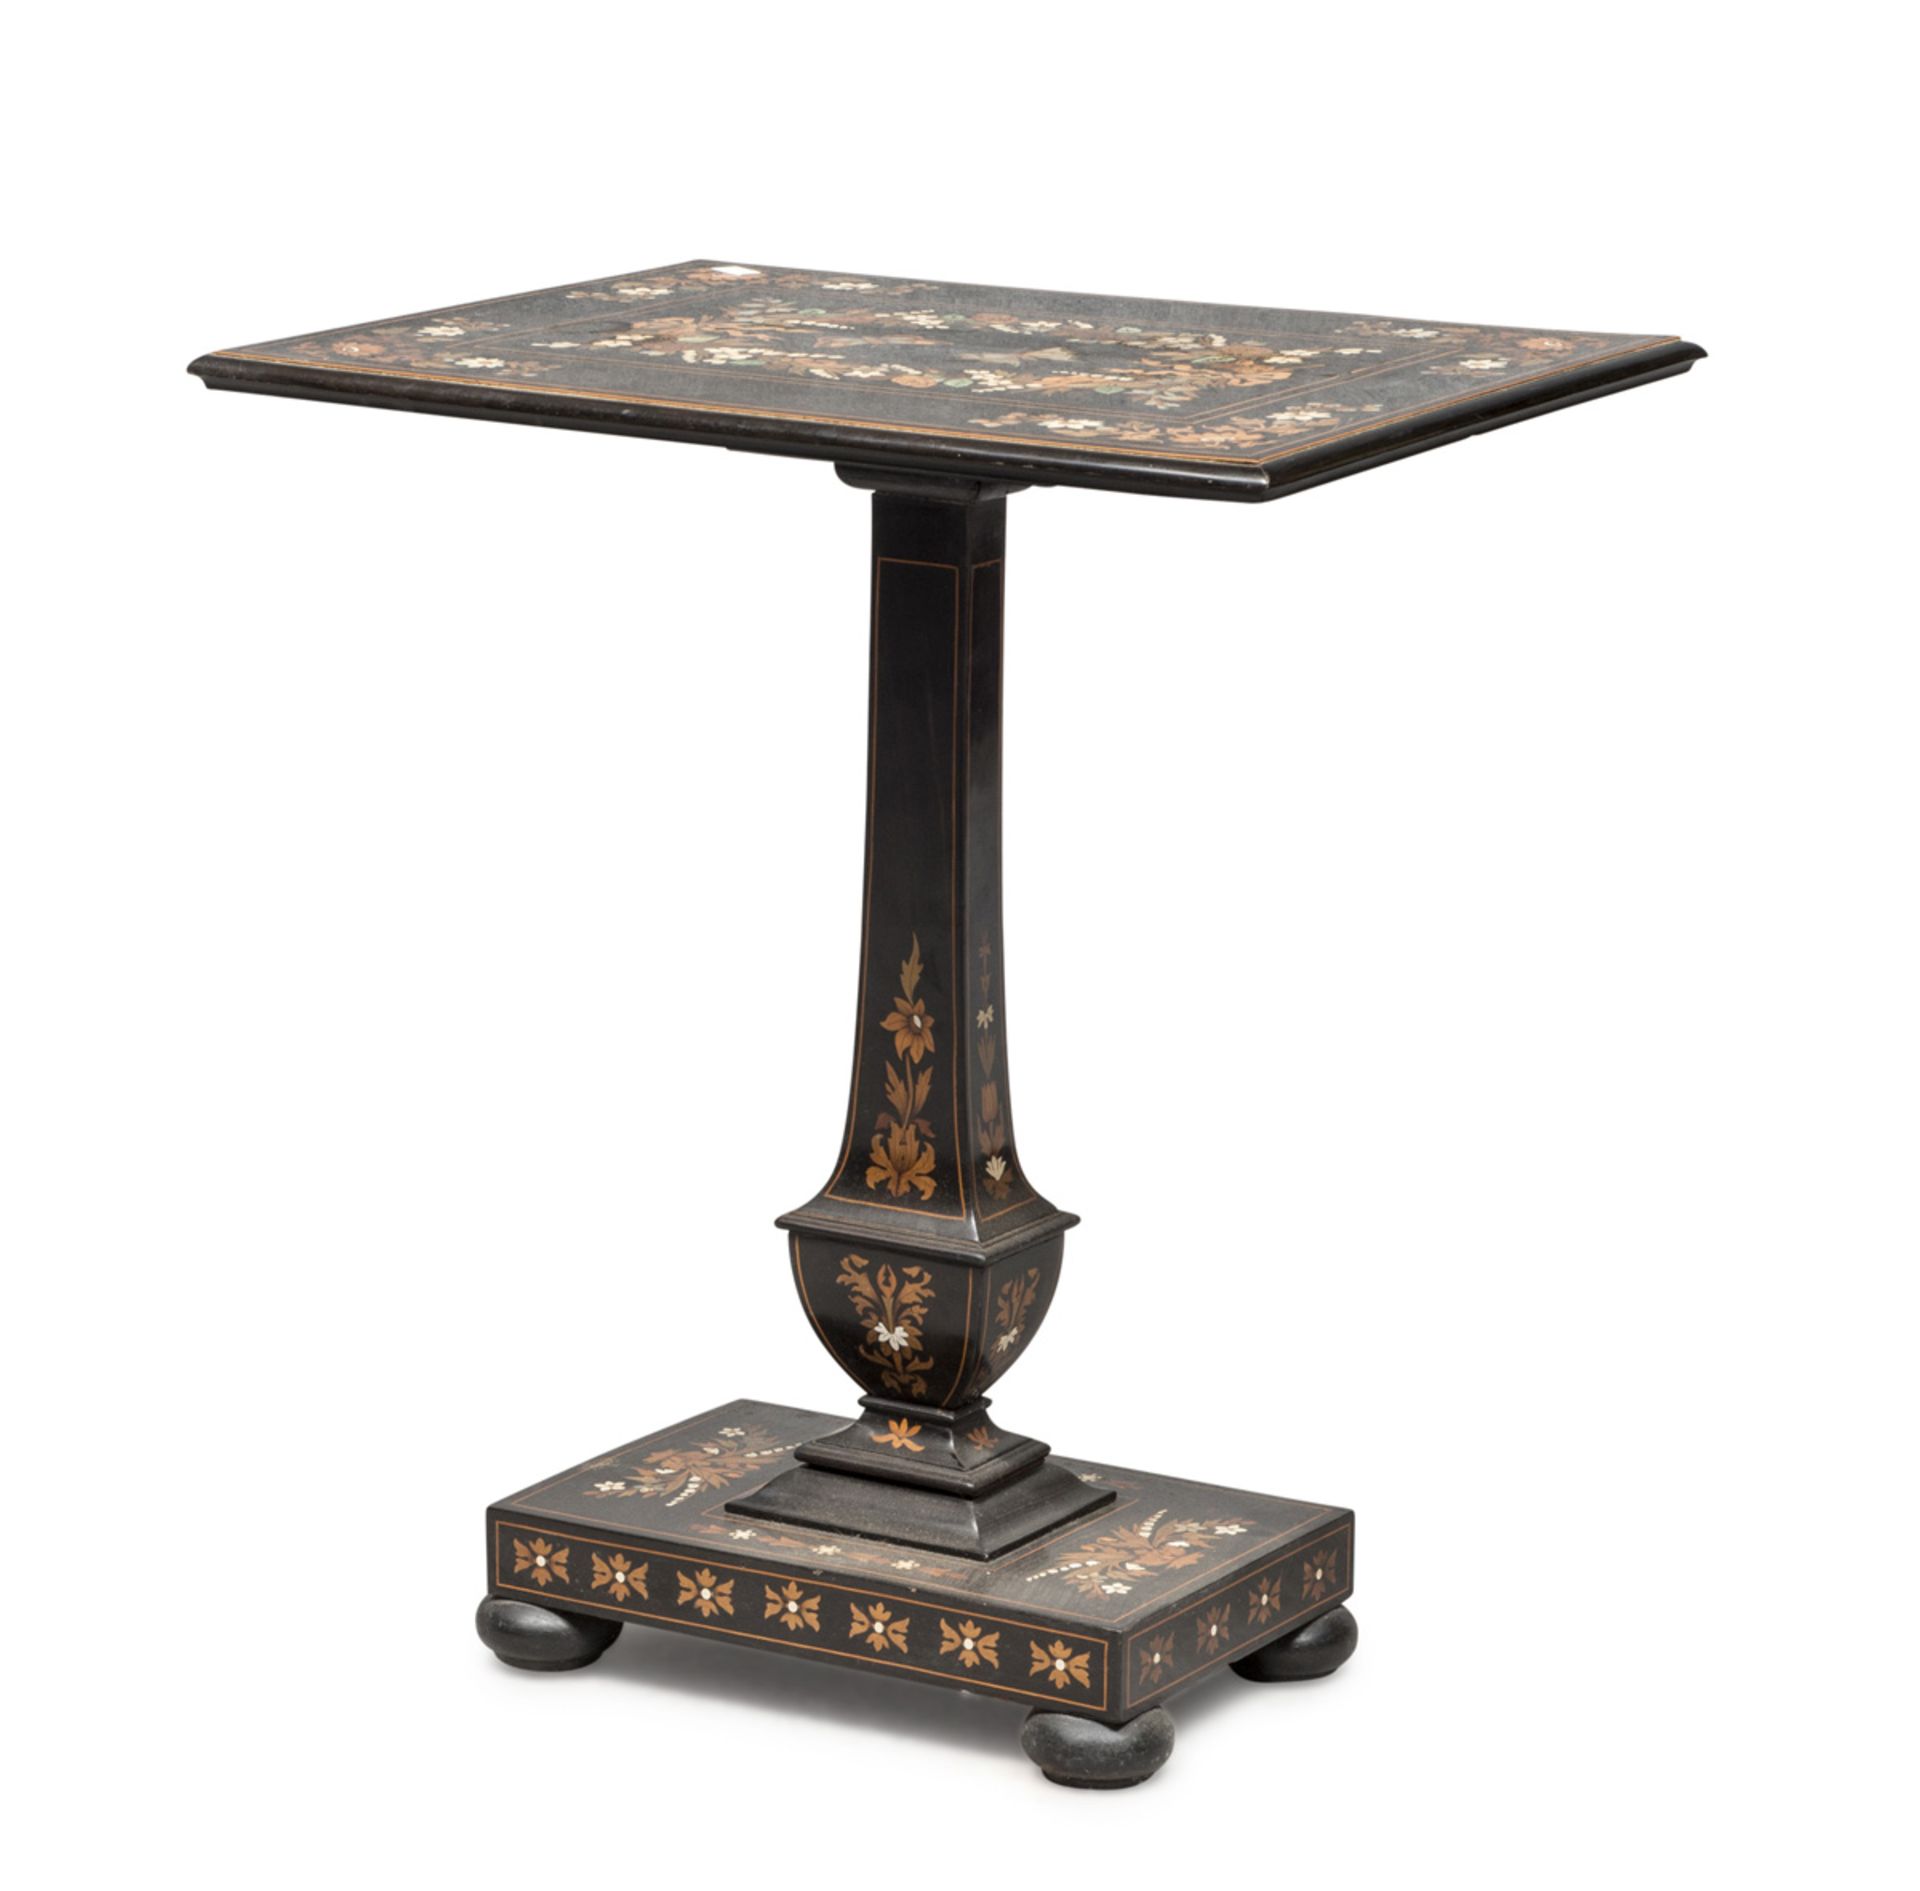 SPLENDID SMALL TABLE IN EBONY PROBABLY FRANCE 19TH CENTURY